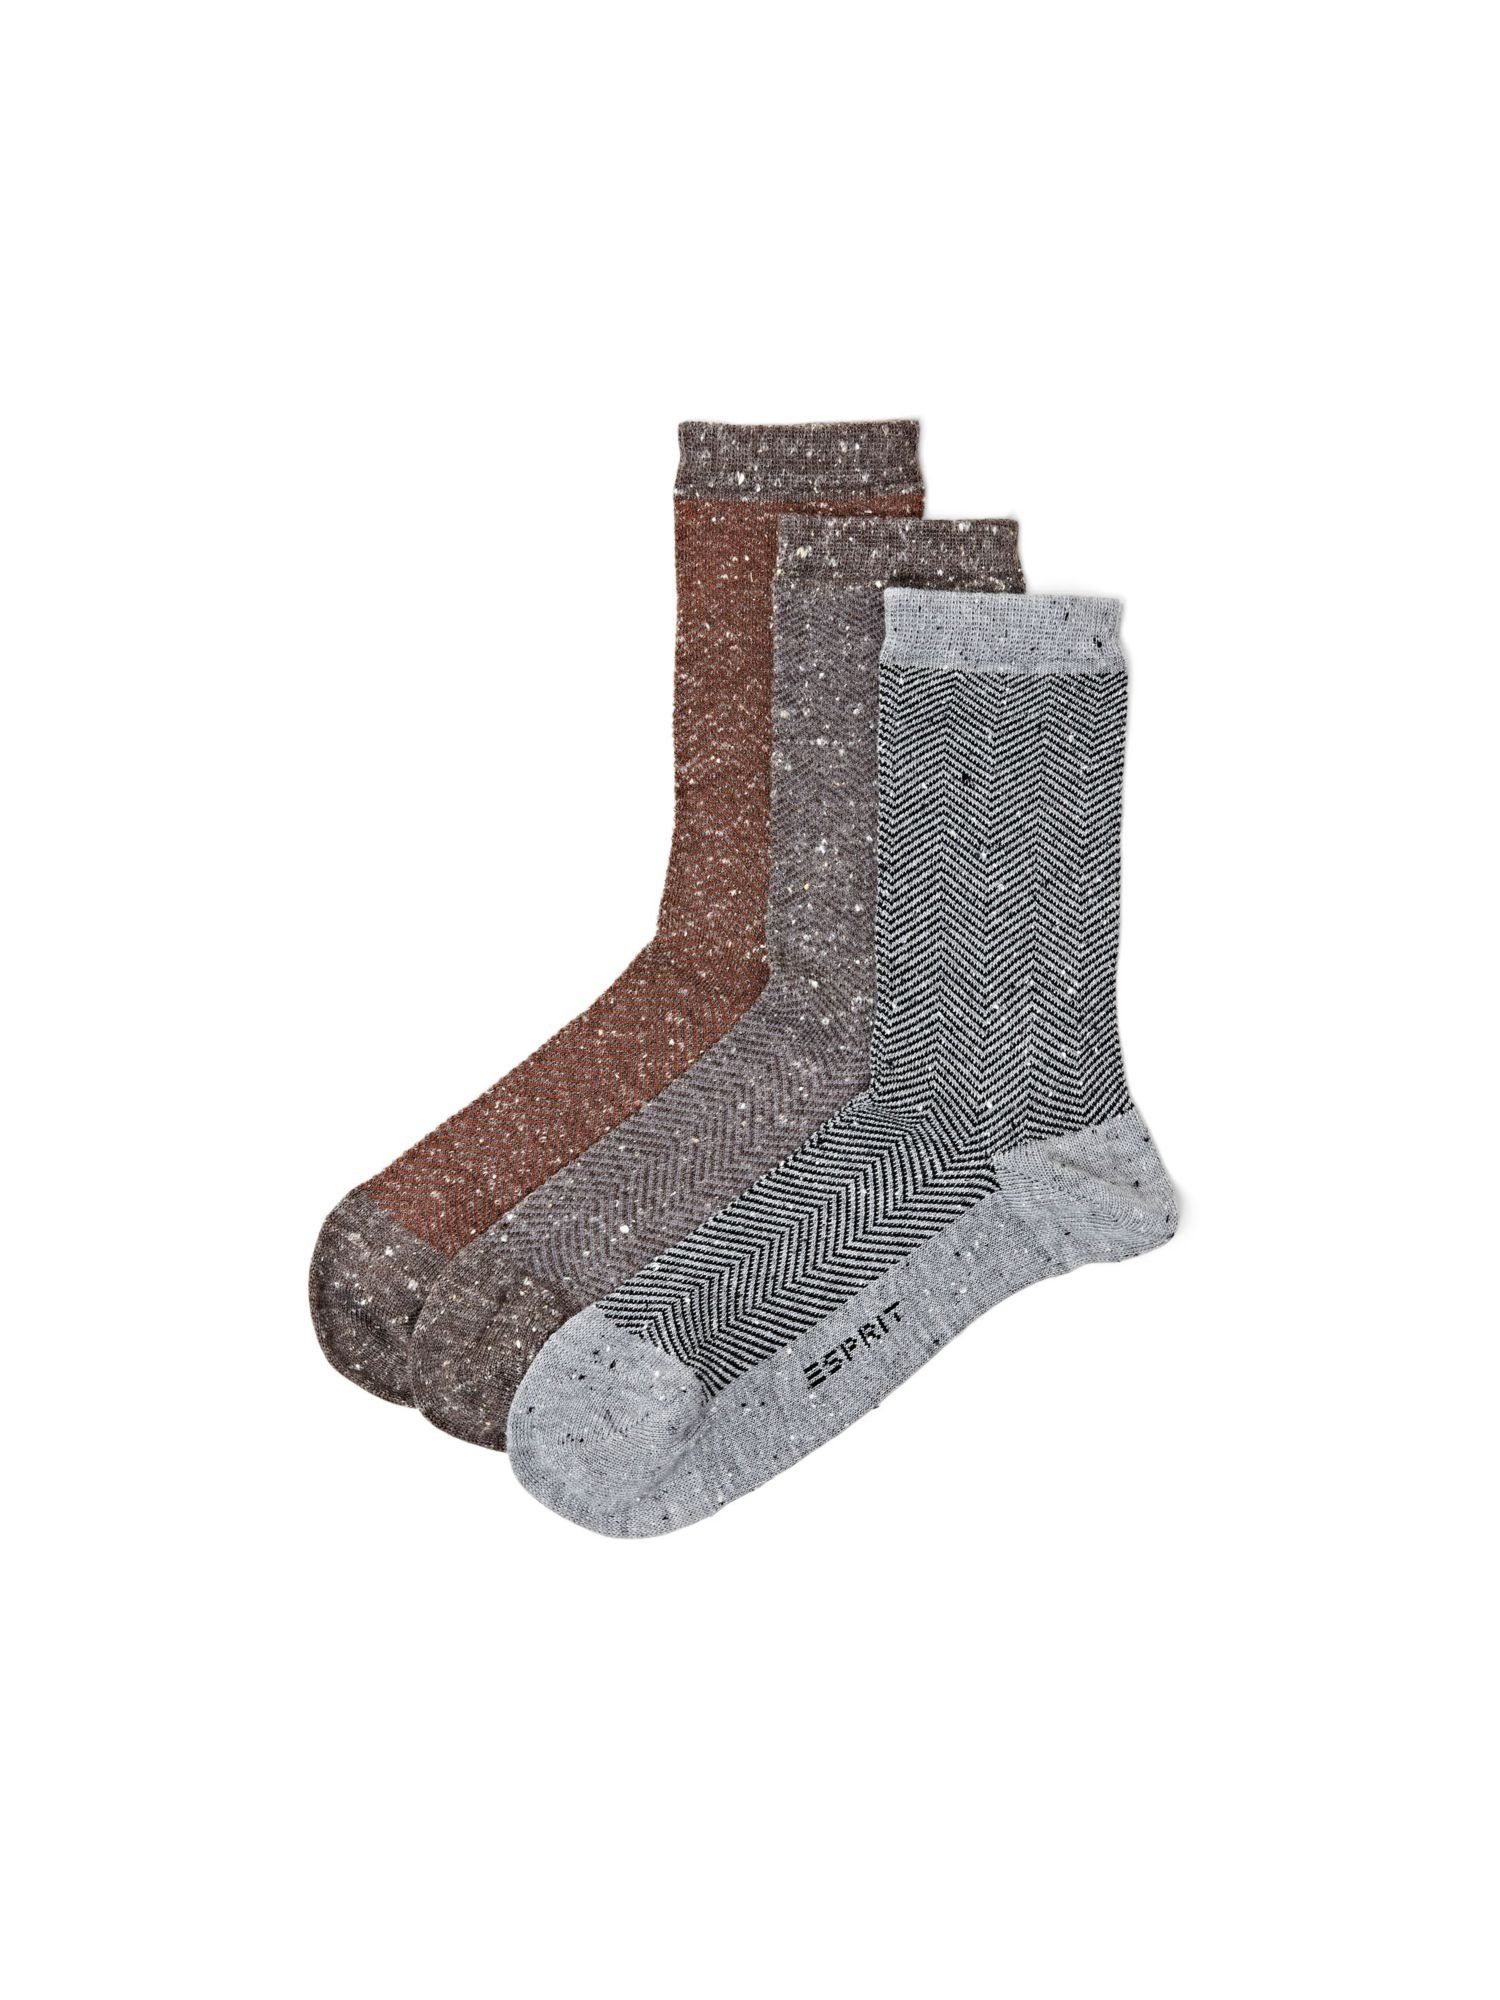 Esprit Socken 3er-Pack Socken mit Fischgratmuster BROWN/GREY